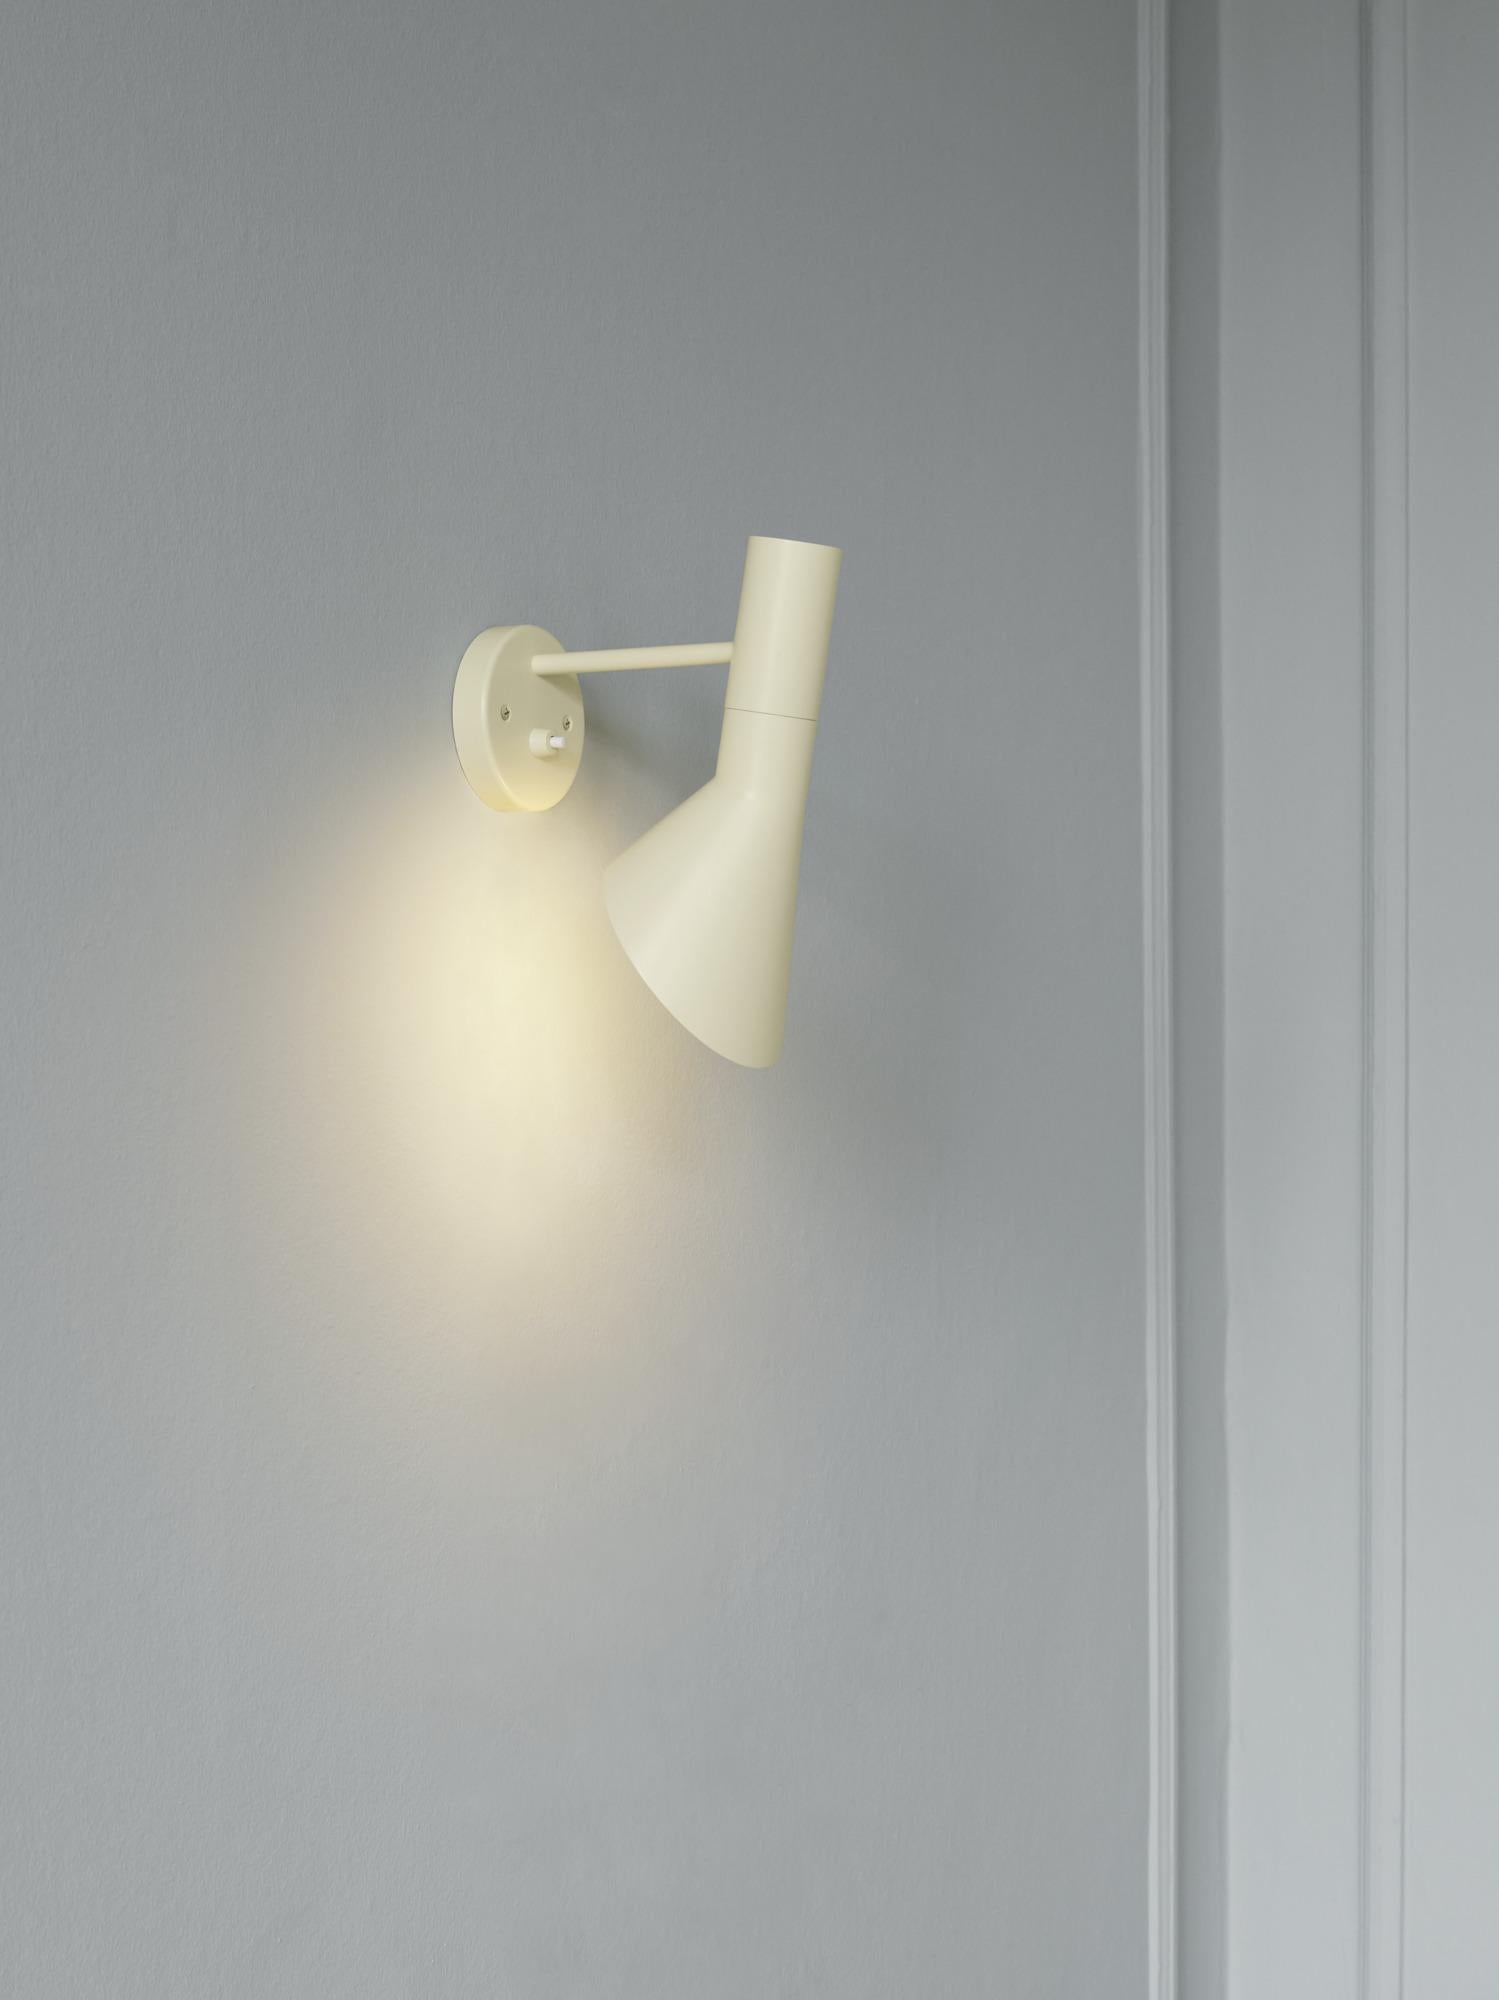 Arne Jacobsen AJ Wall Light for Louis Poulsen in Pale Petroleum For Sale 3